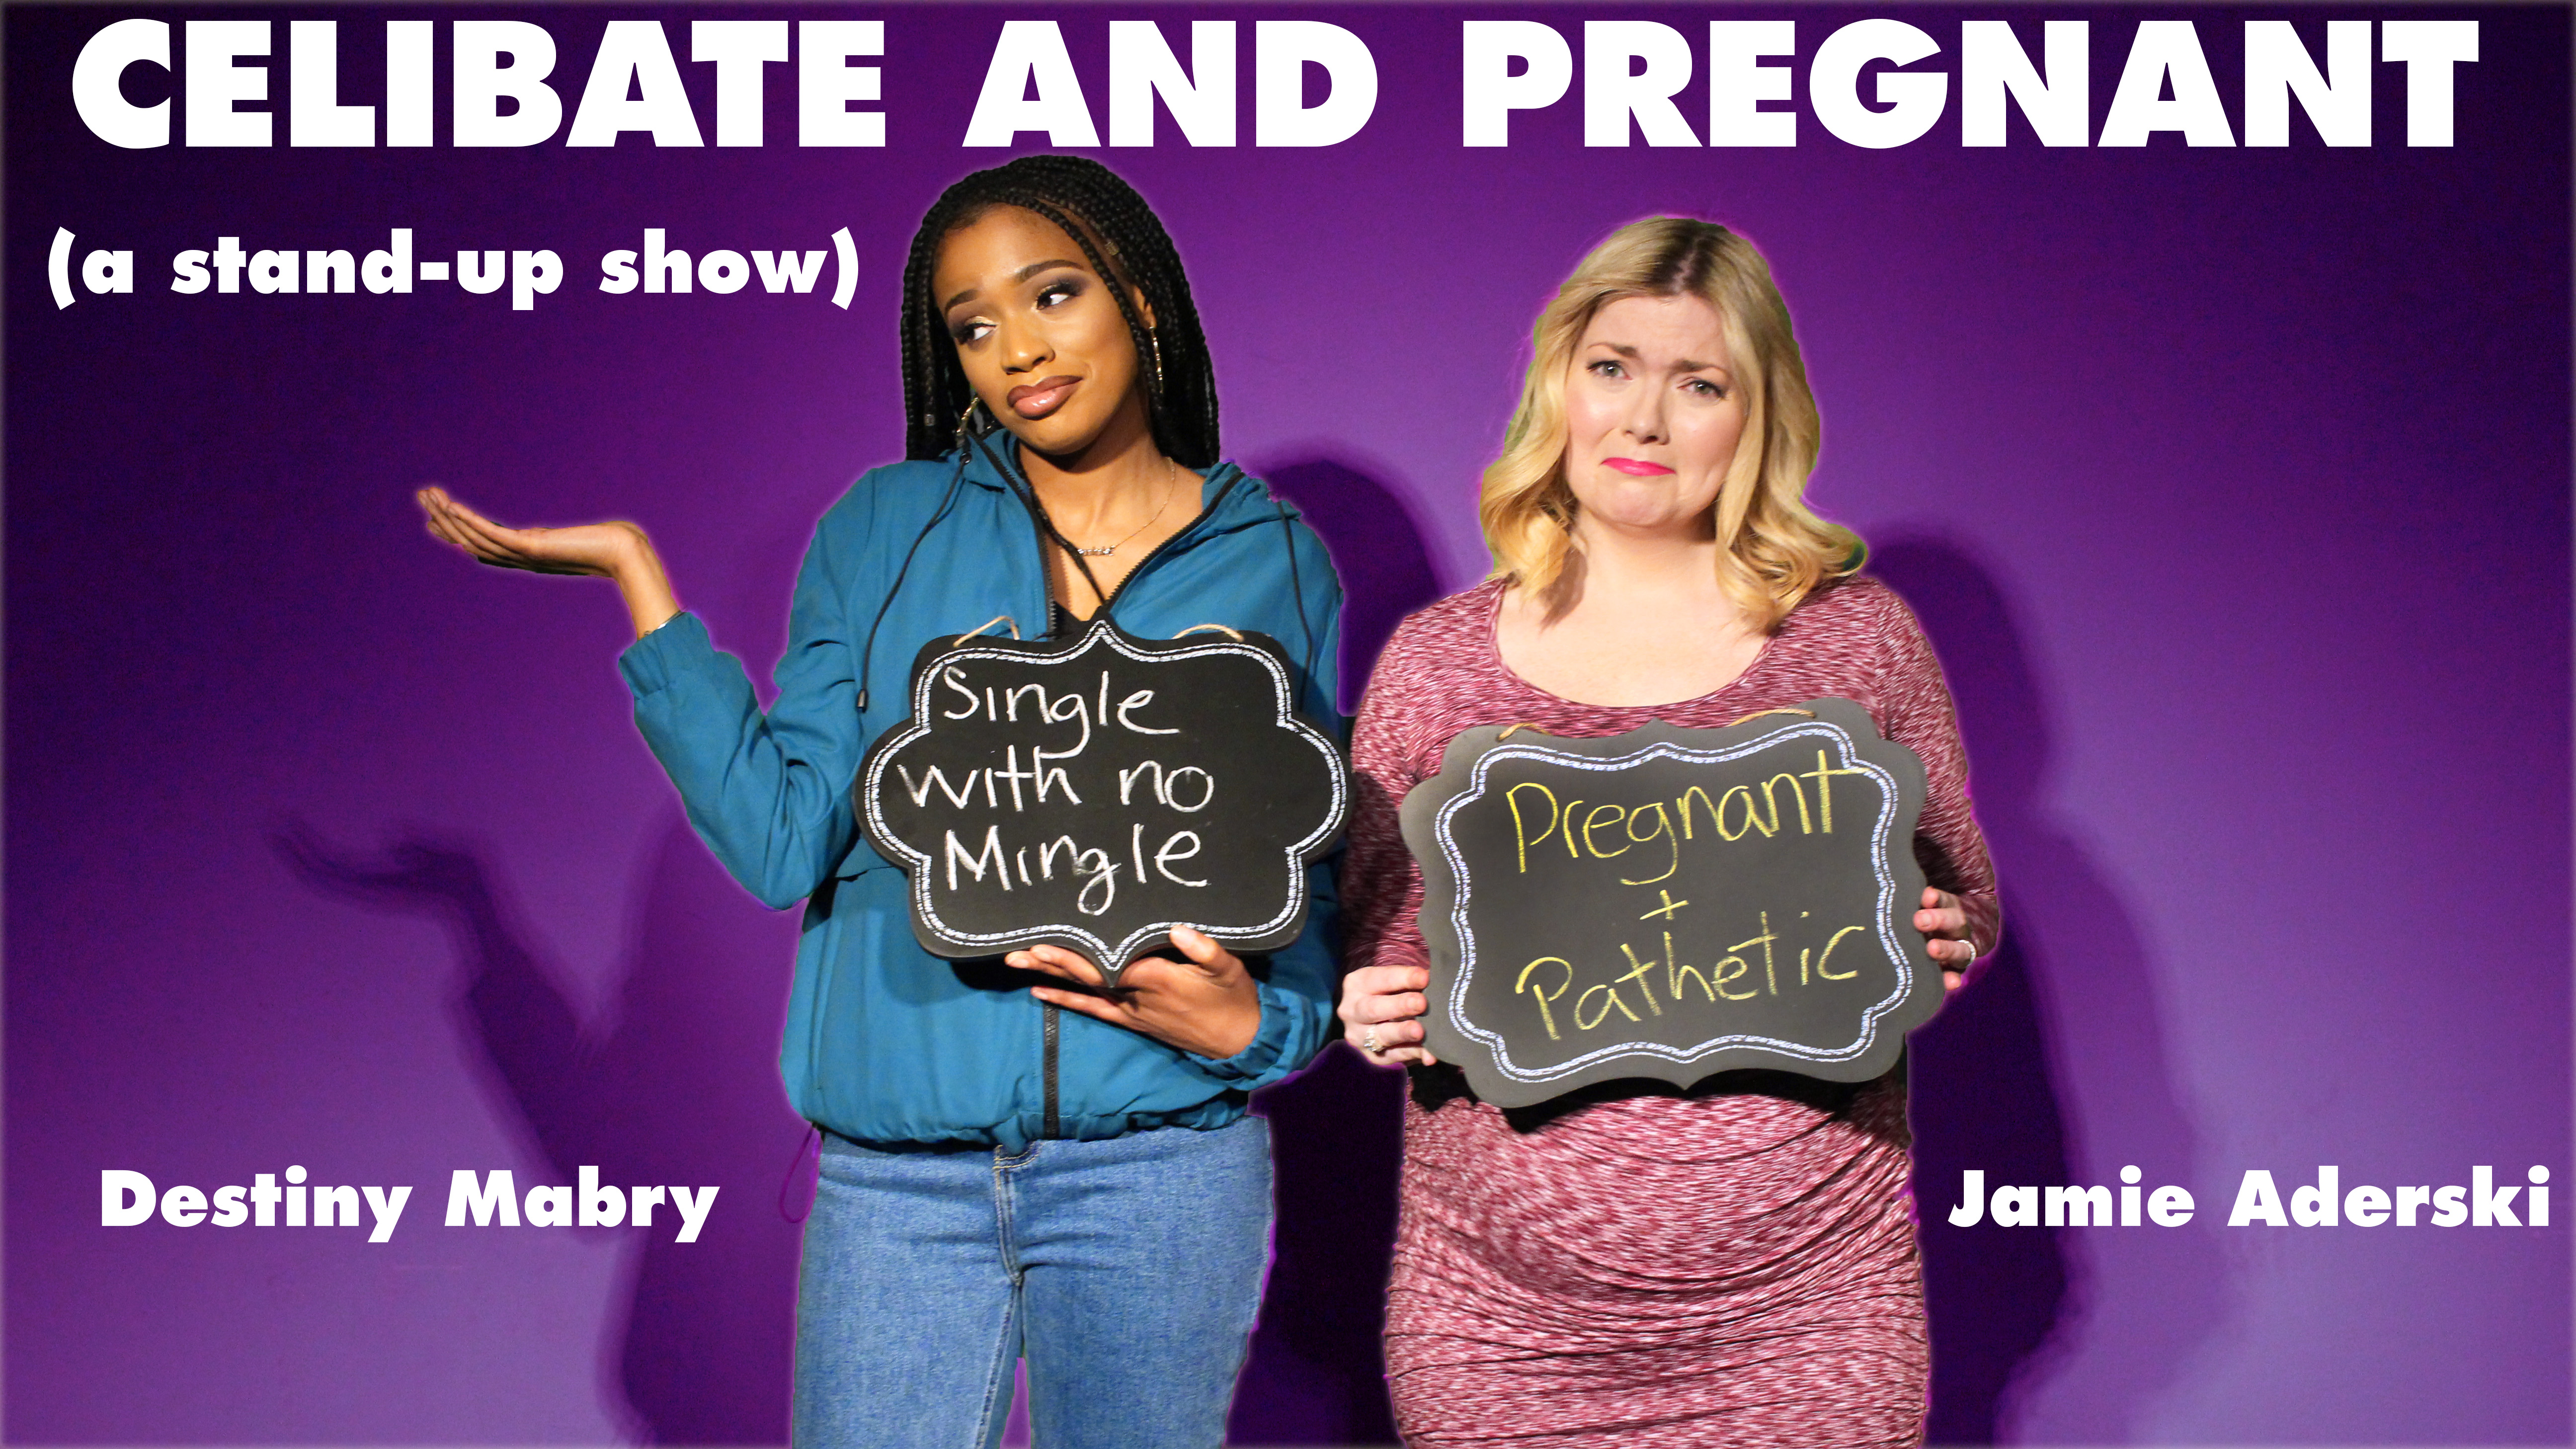 Destiny Mabry & Jamie Aderski: "Celibate and Pregnant"